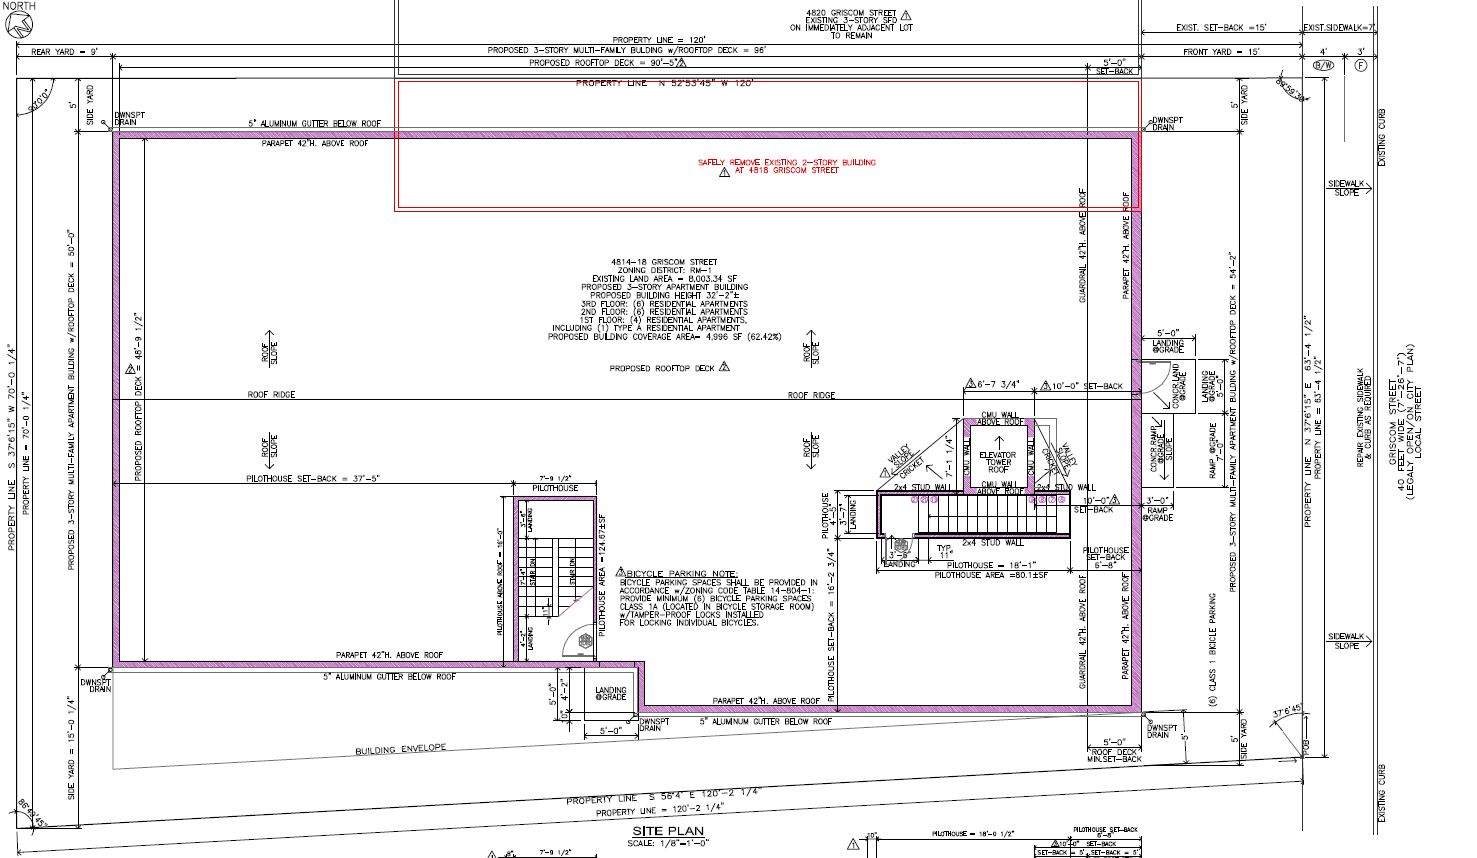 4814-18 Griscom Street. Site plan. Credit: Star Homes Management LLC via the City of Philadelphia